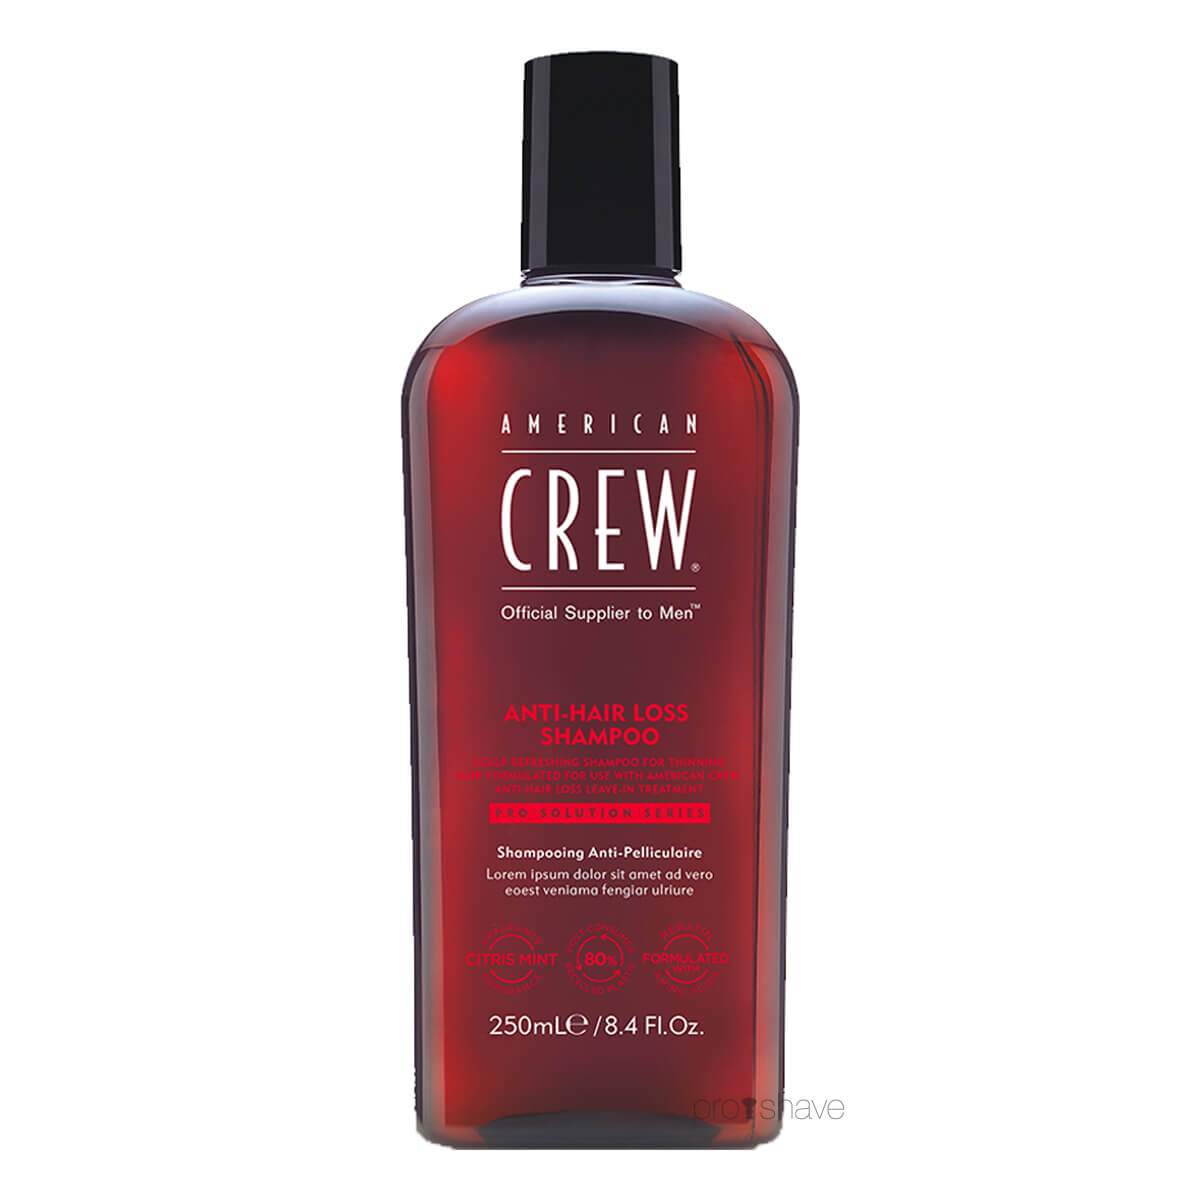 Billede af American Crew Anti-Hairloss Shampoo, 250 ml.